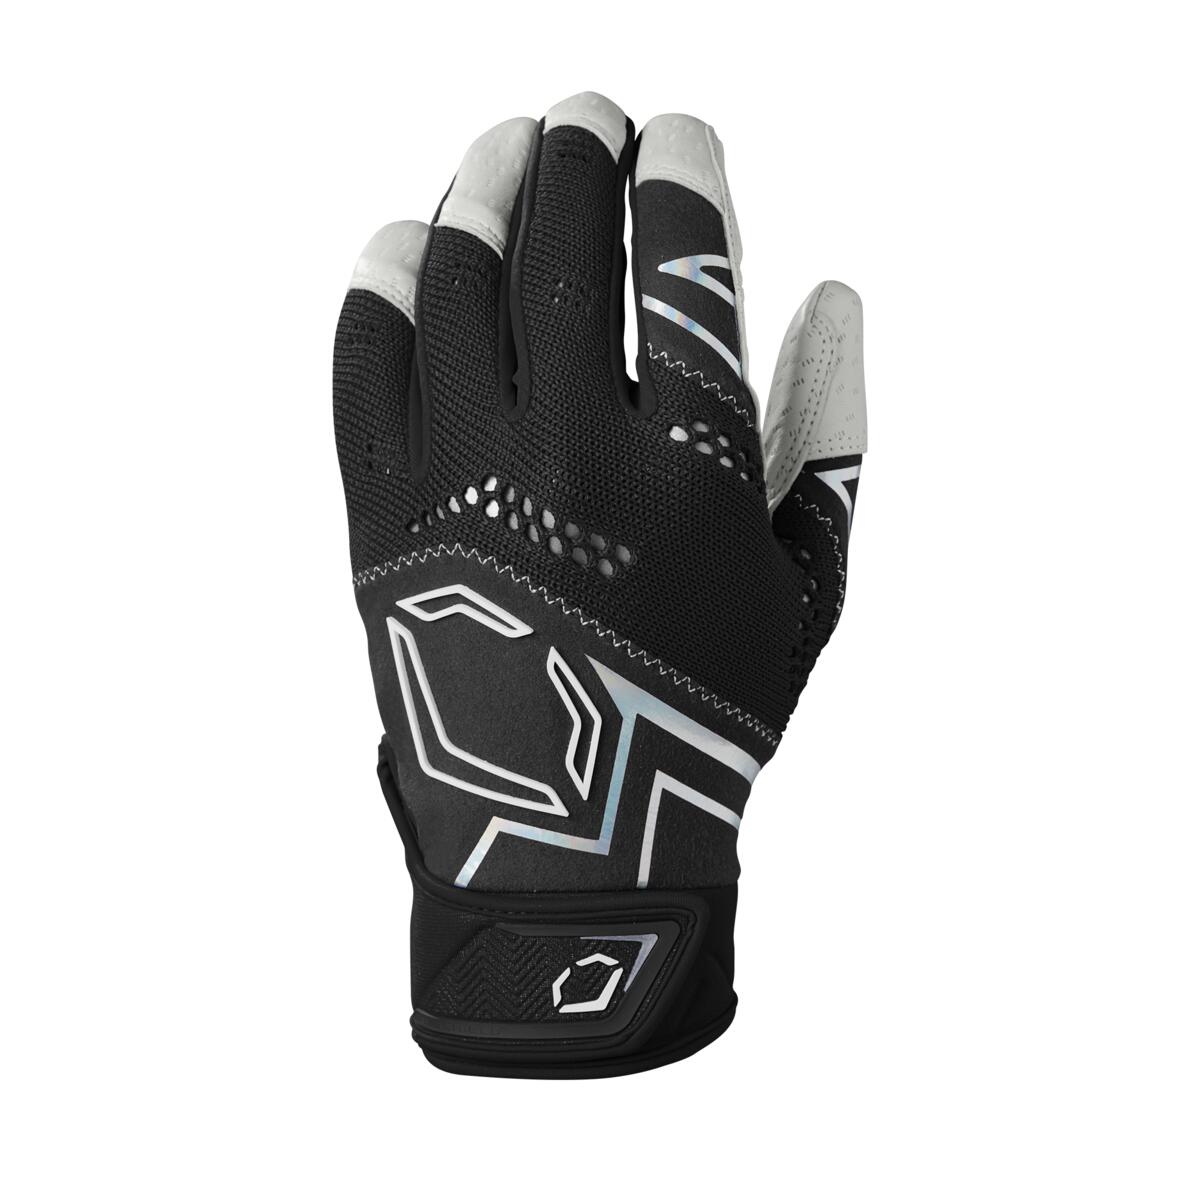 Evoshield PRO-SRZ V2 Batting Gloves